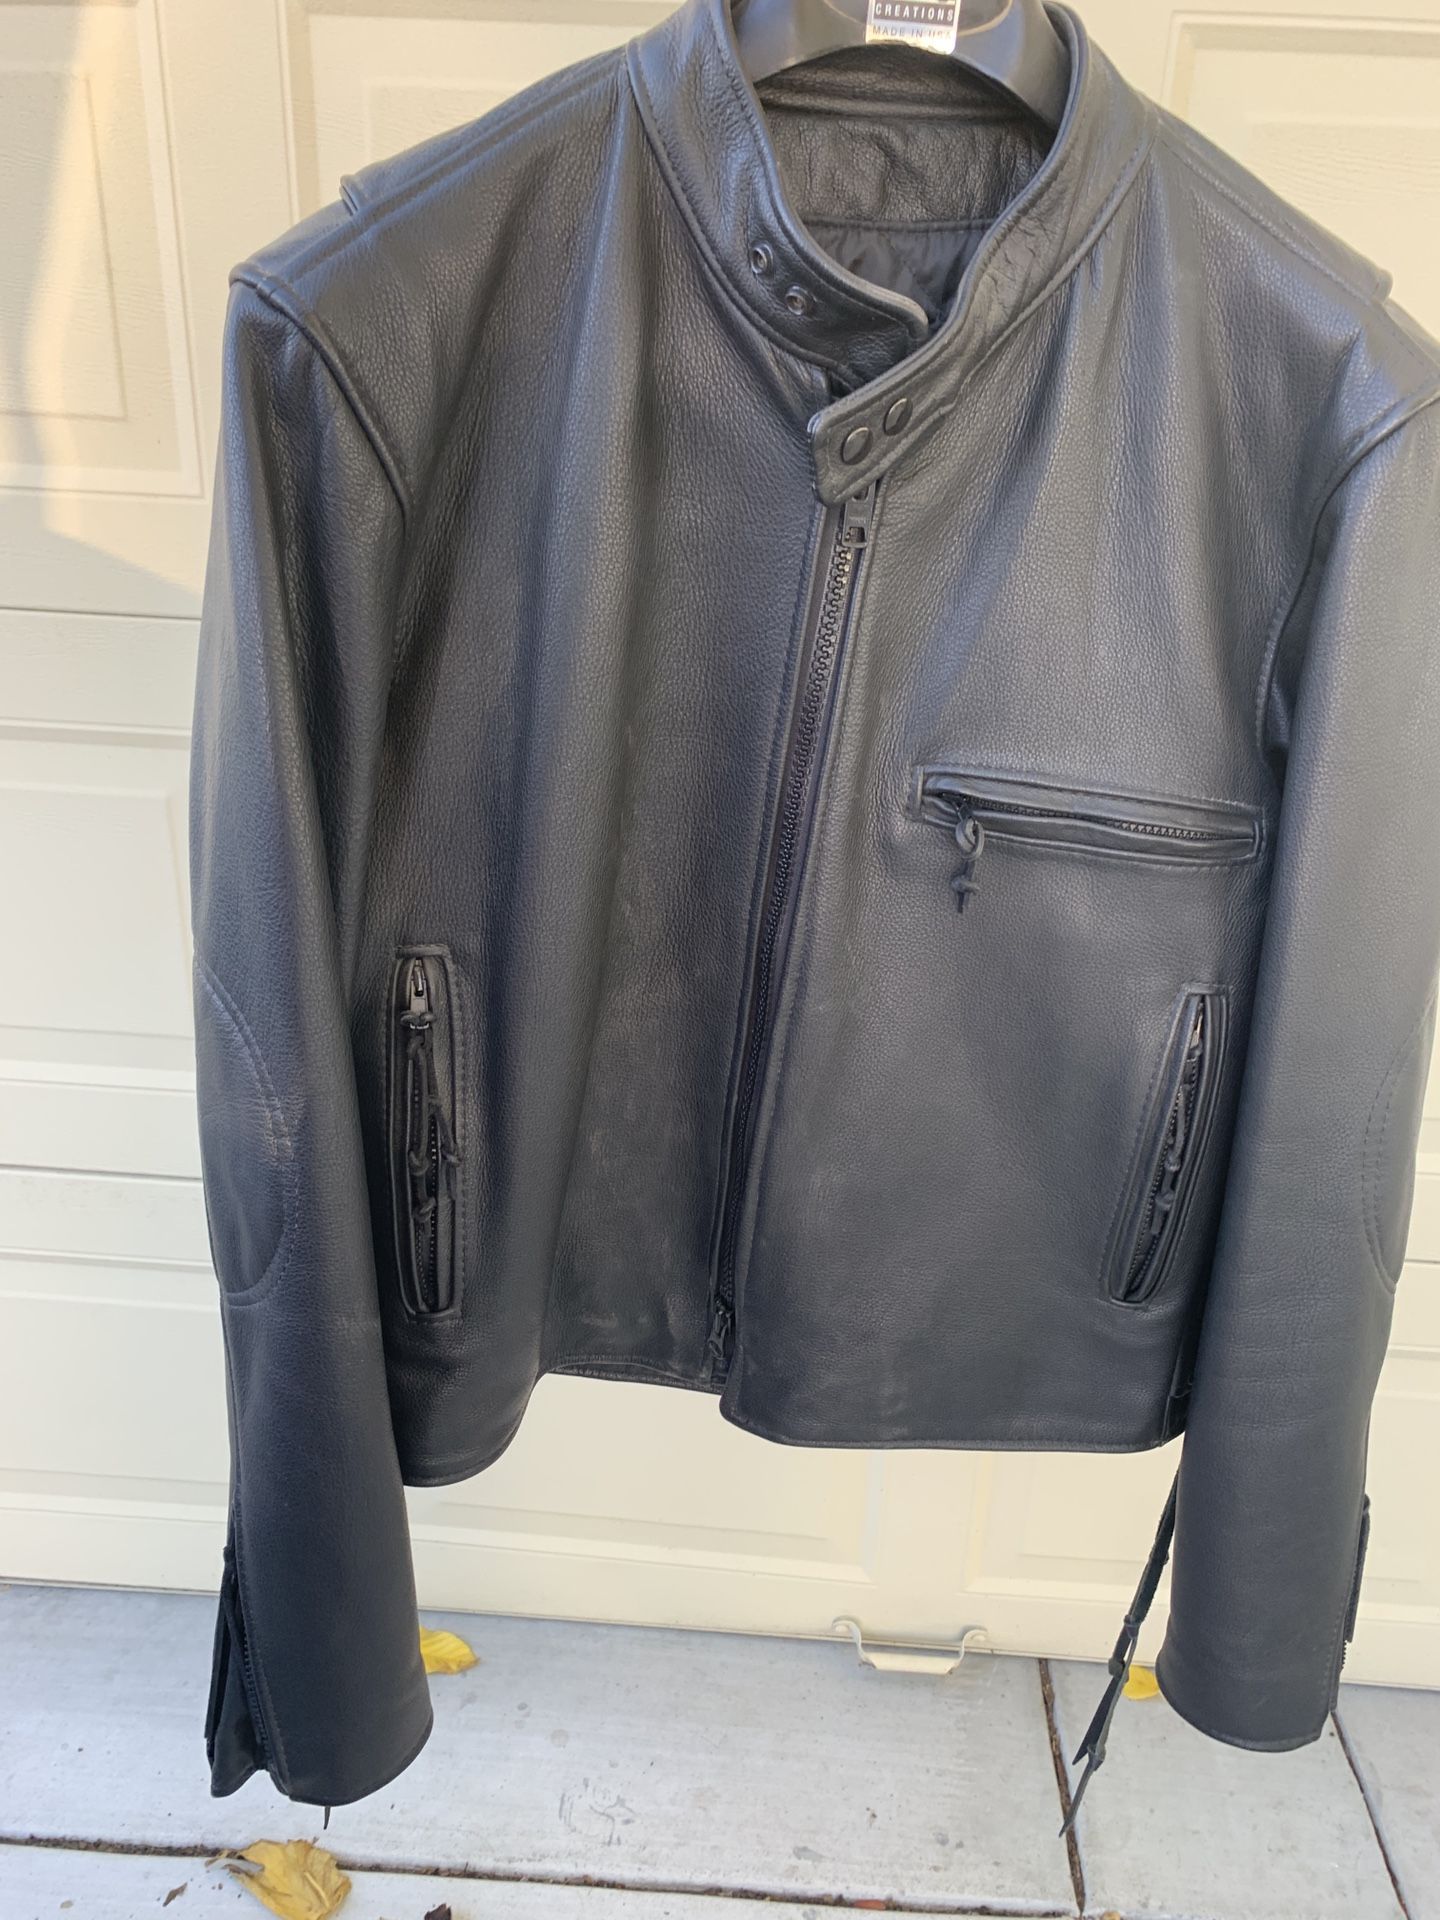 Leather Motorcycle Jacket $125